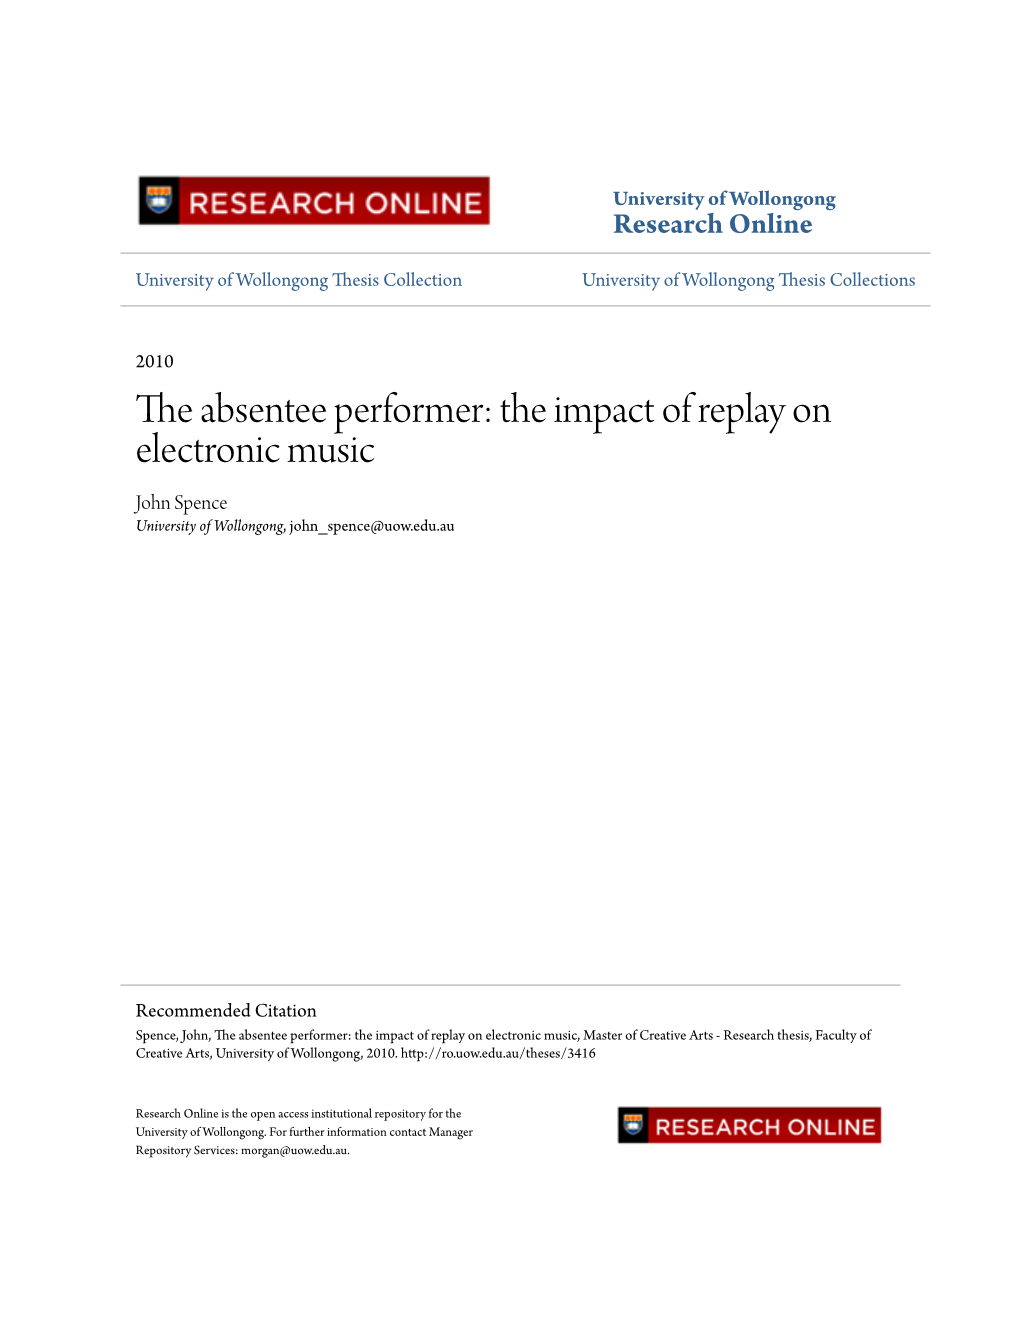 The Impact of Replay on Electronic Music John Spence University of Wollongong, John Spence@Uow.Edu.Au